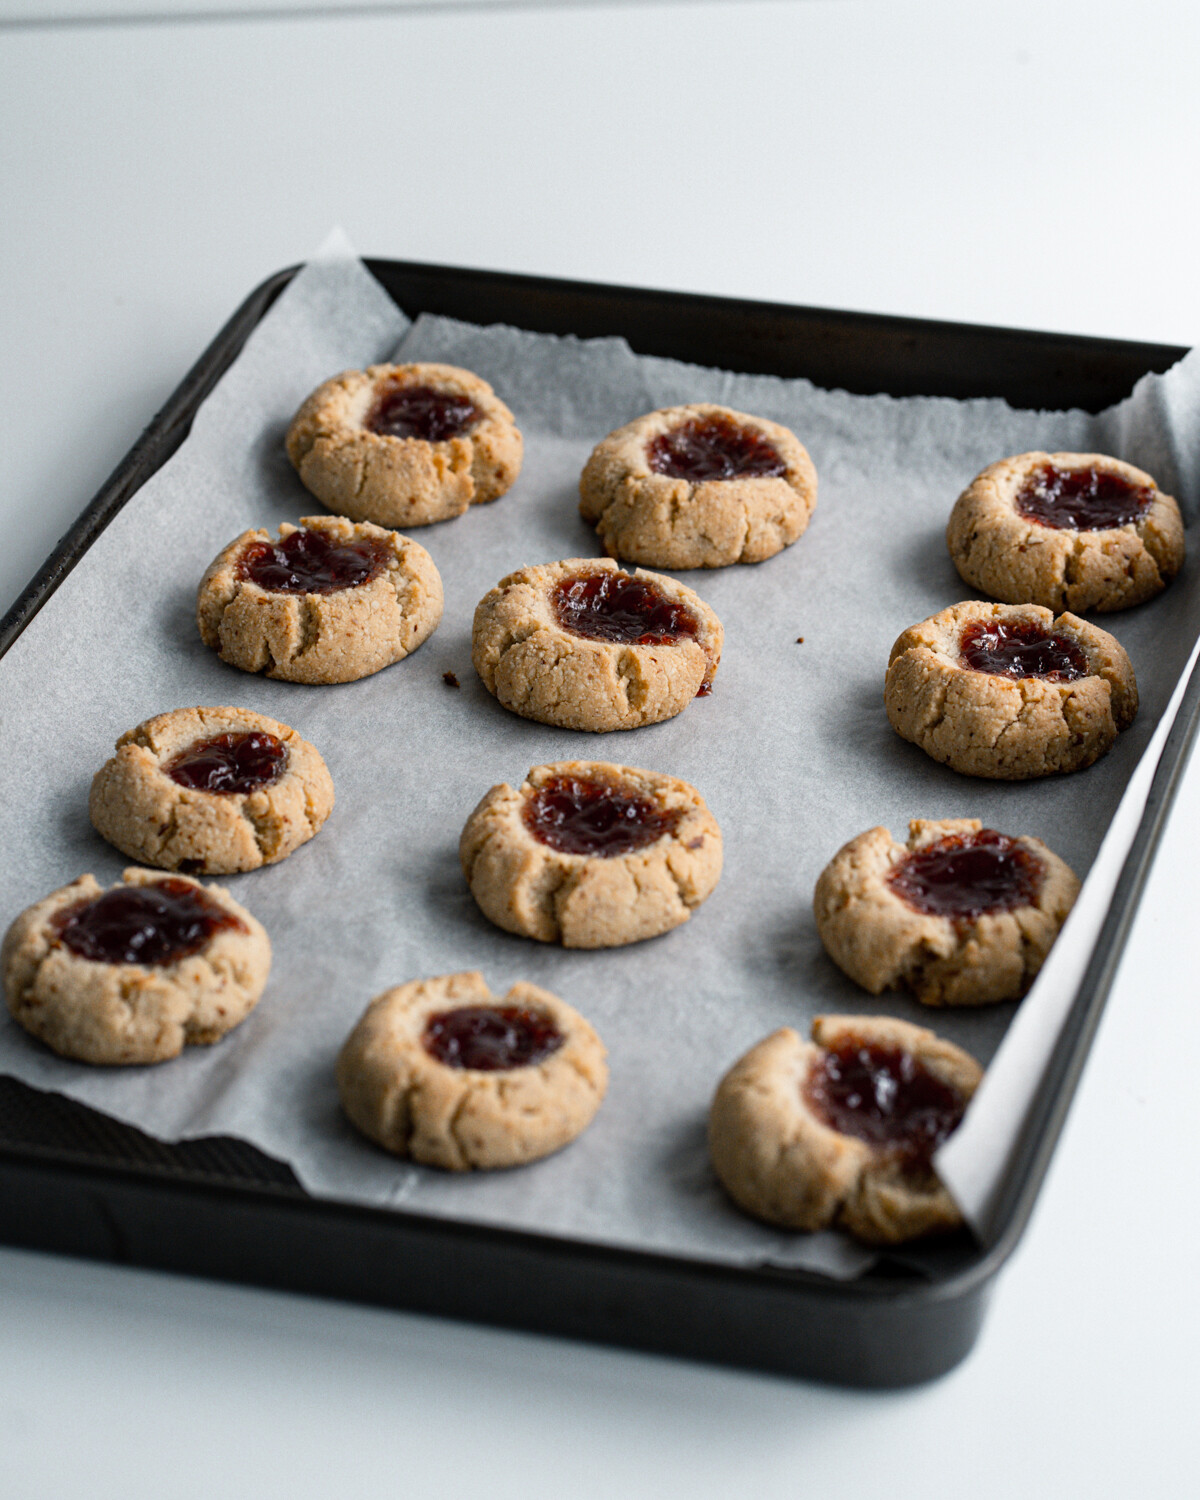 Gluten-free thumbprint cookies